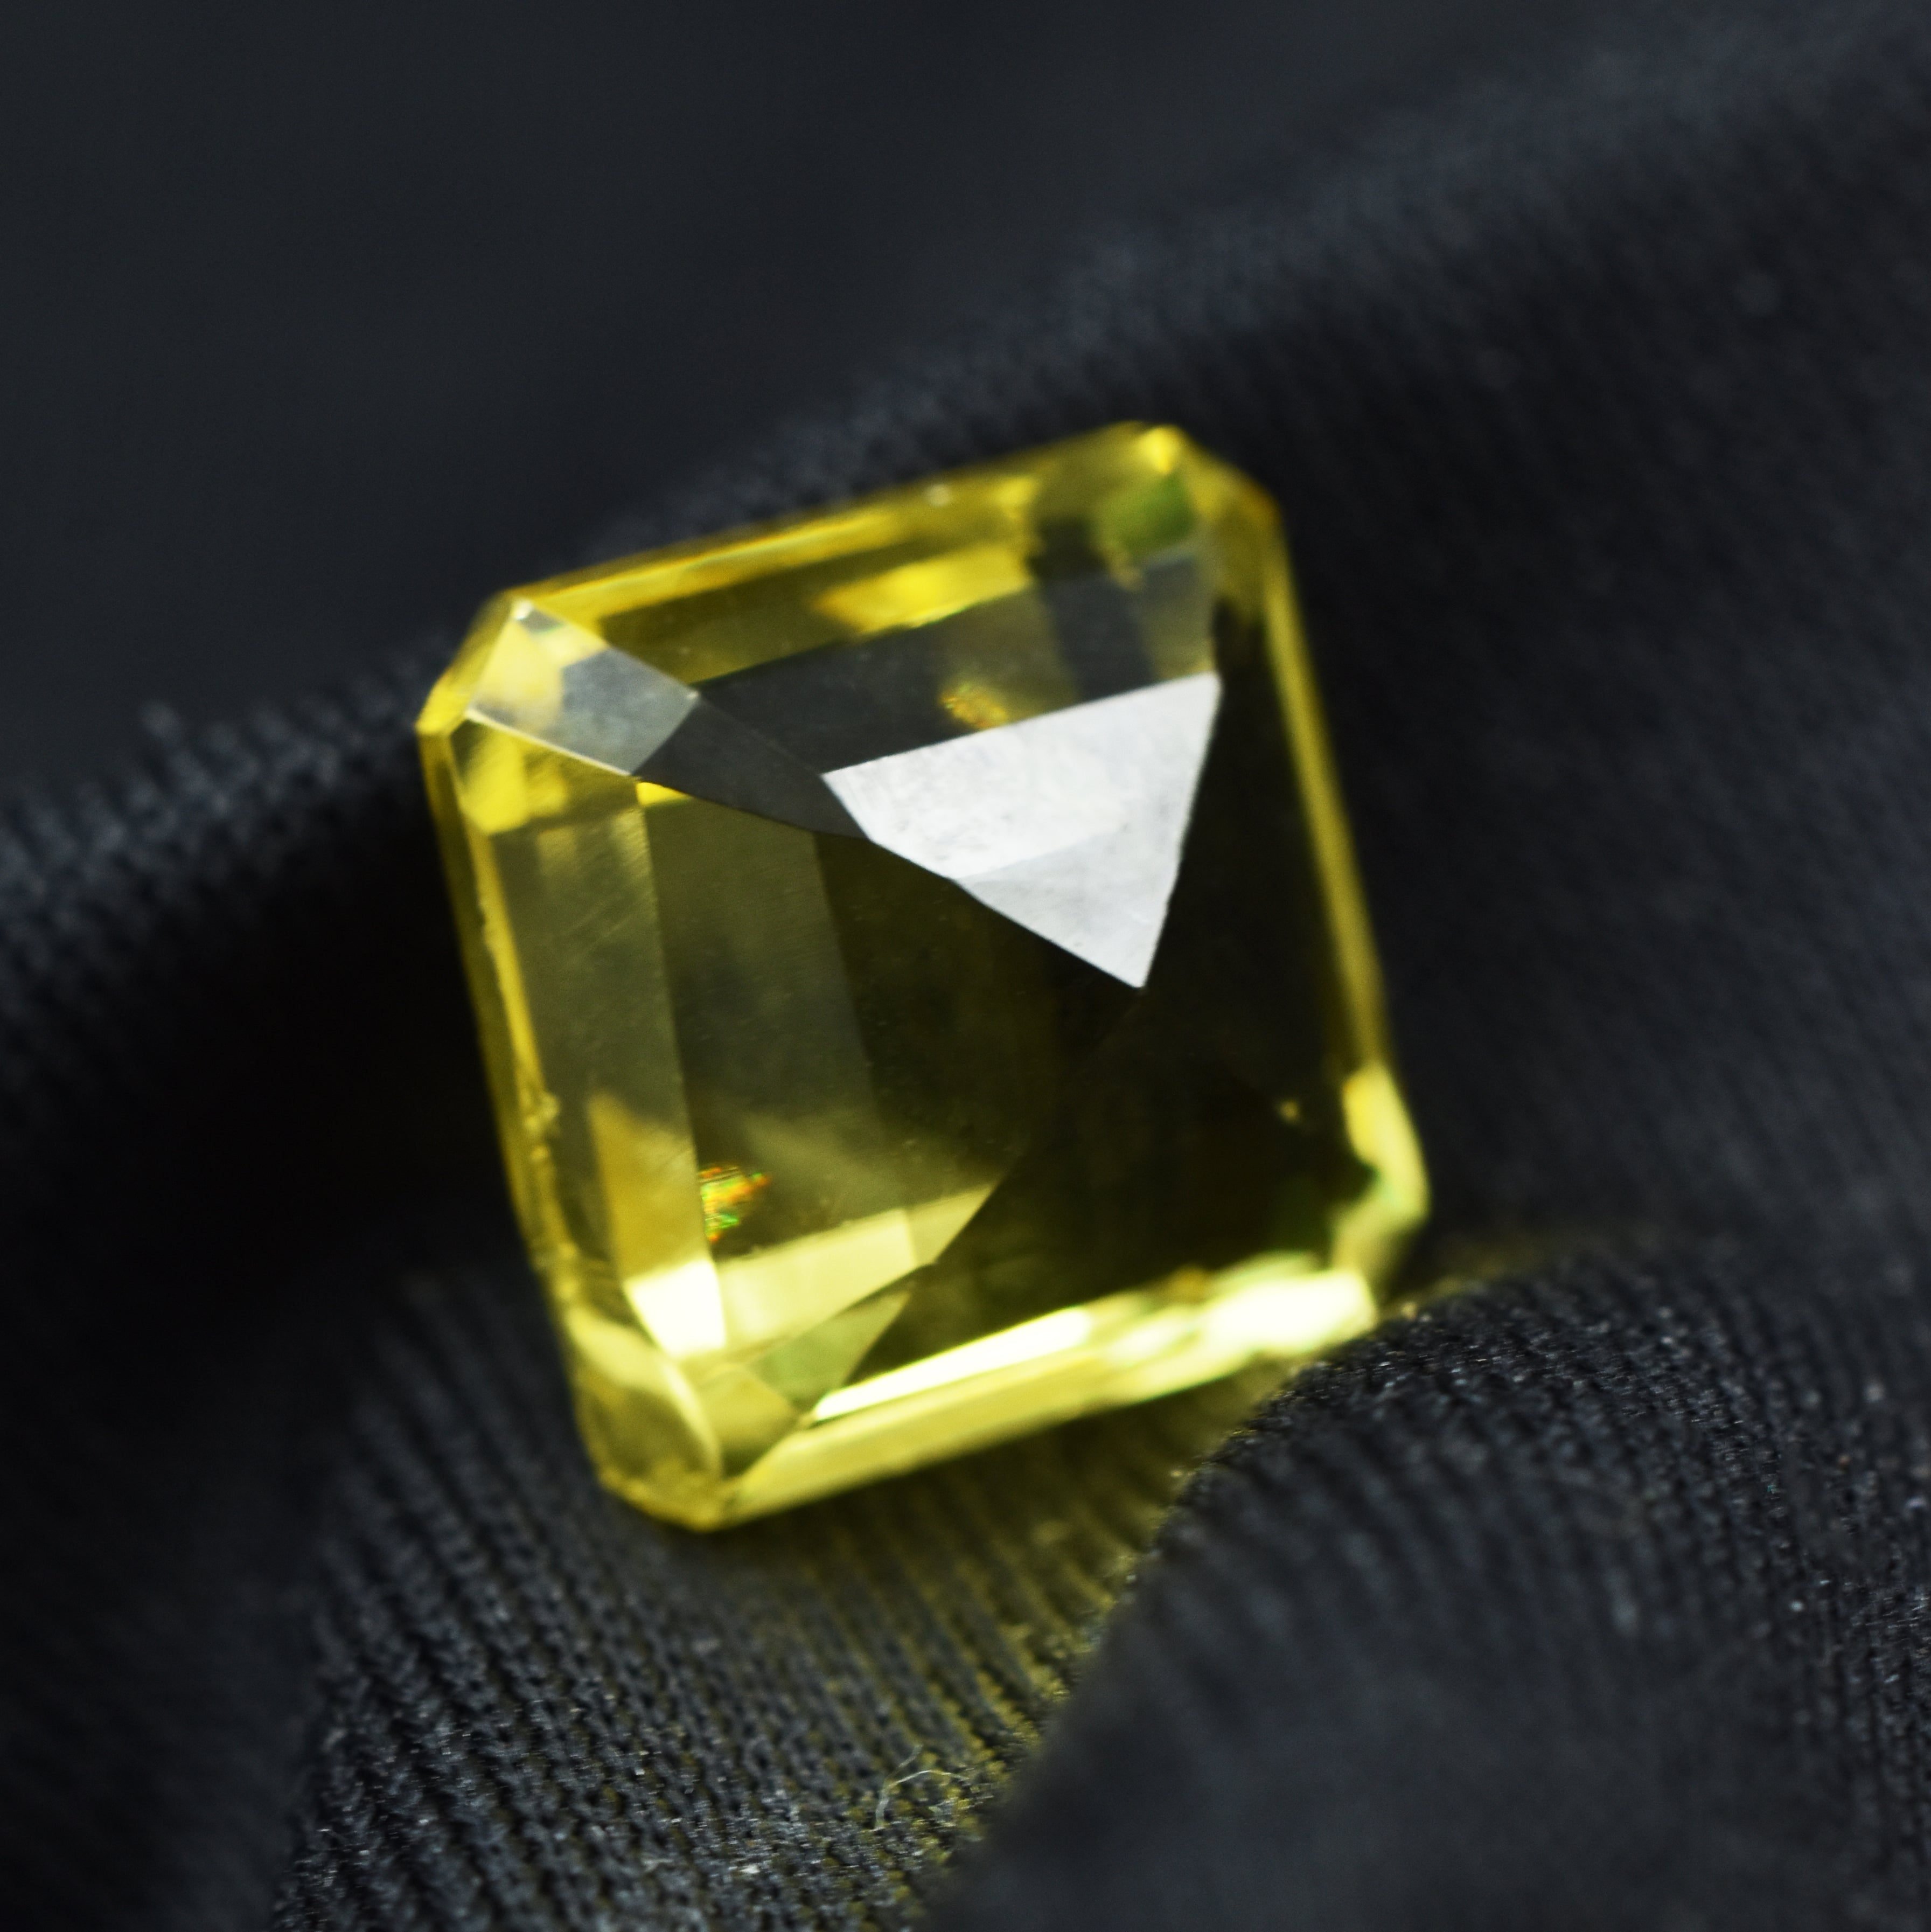 Yellow Sapphire 9.30 Carat Square Cut Luxury Gemstone Certified Natural Loose Gemstone